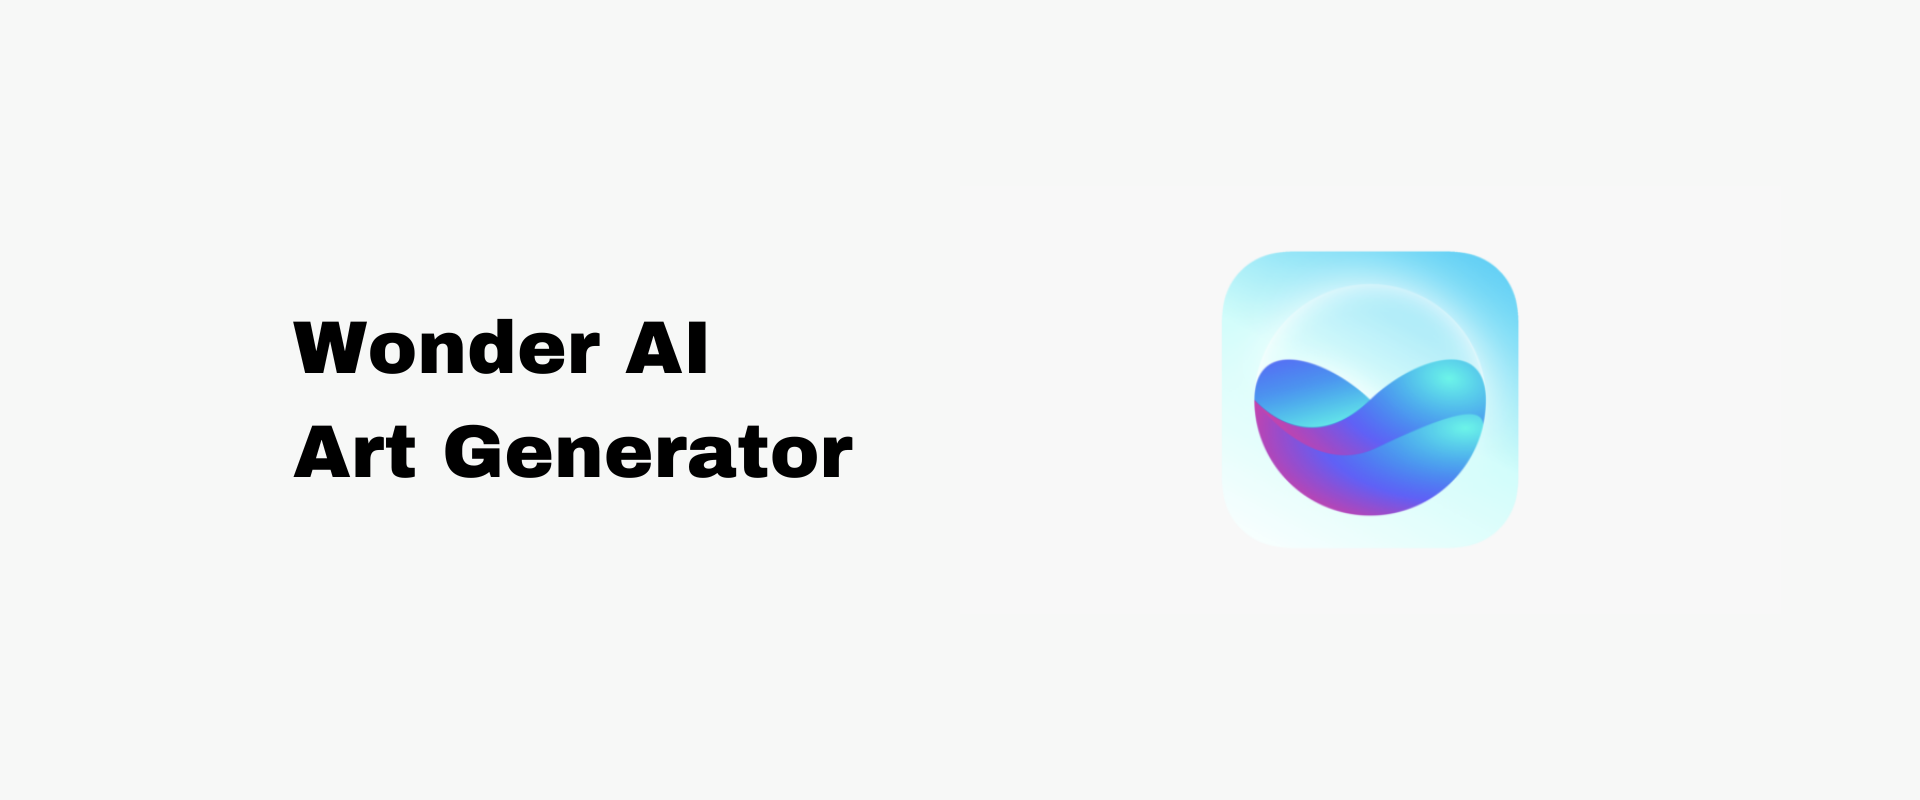 Wonde AI Art Generator